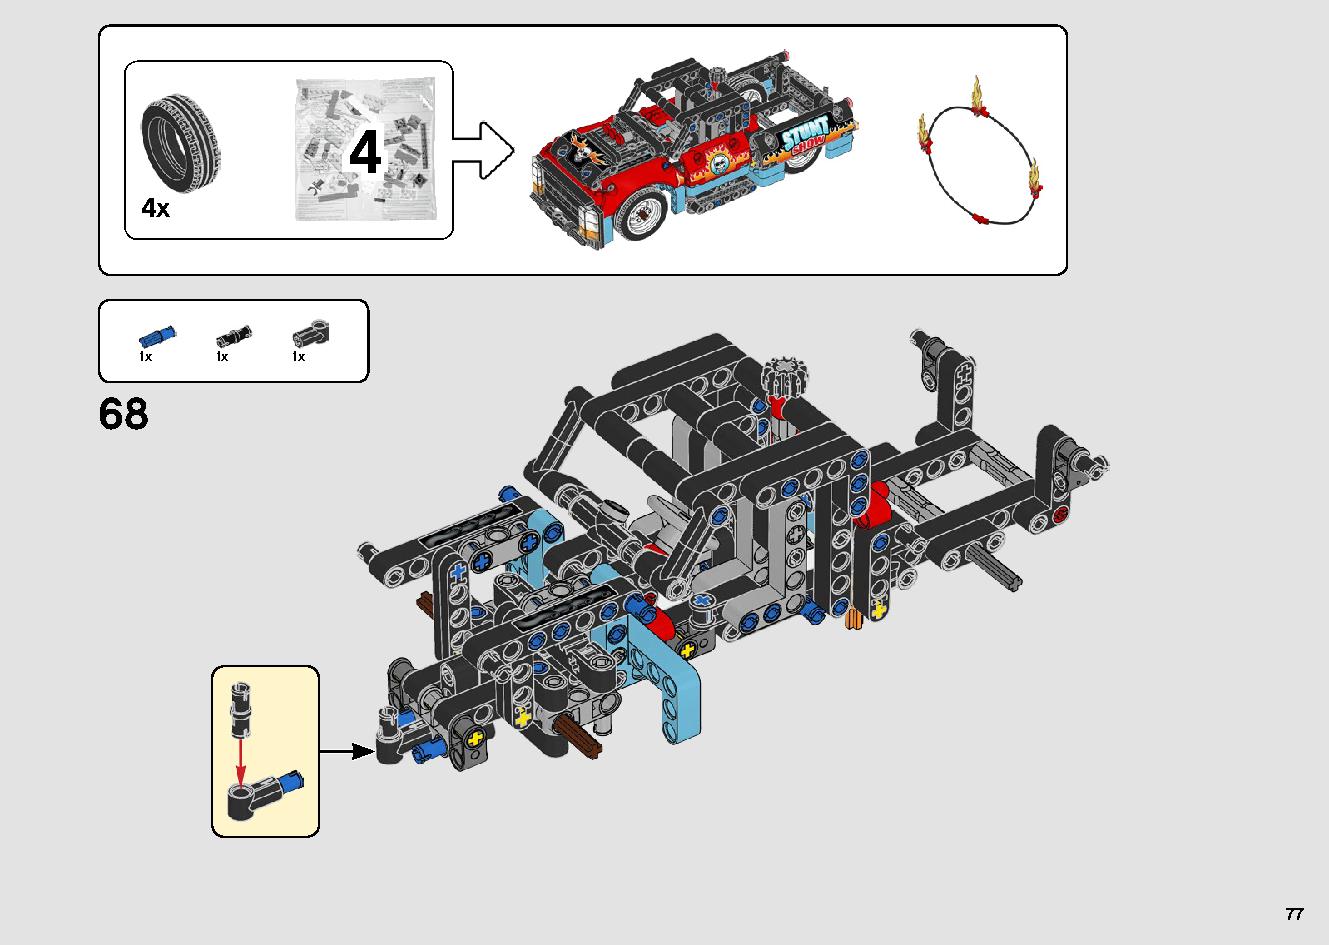 Stunt Show Truck & Bike 42106 LEGO information LEGO instructions 77 page